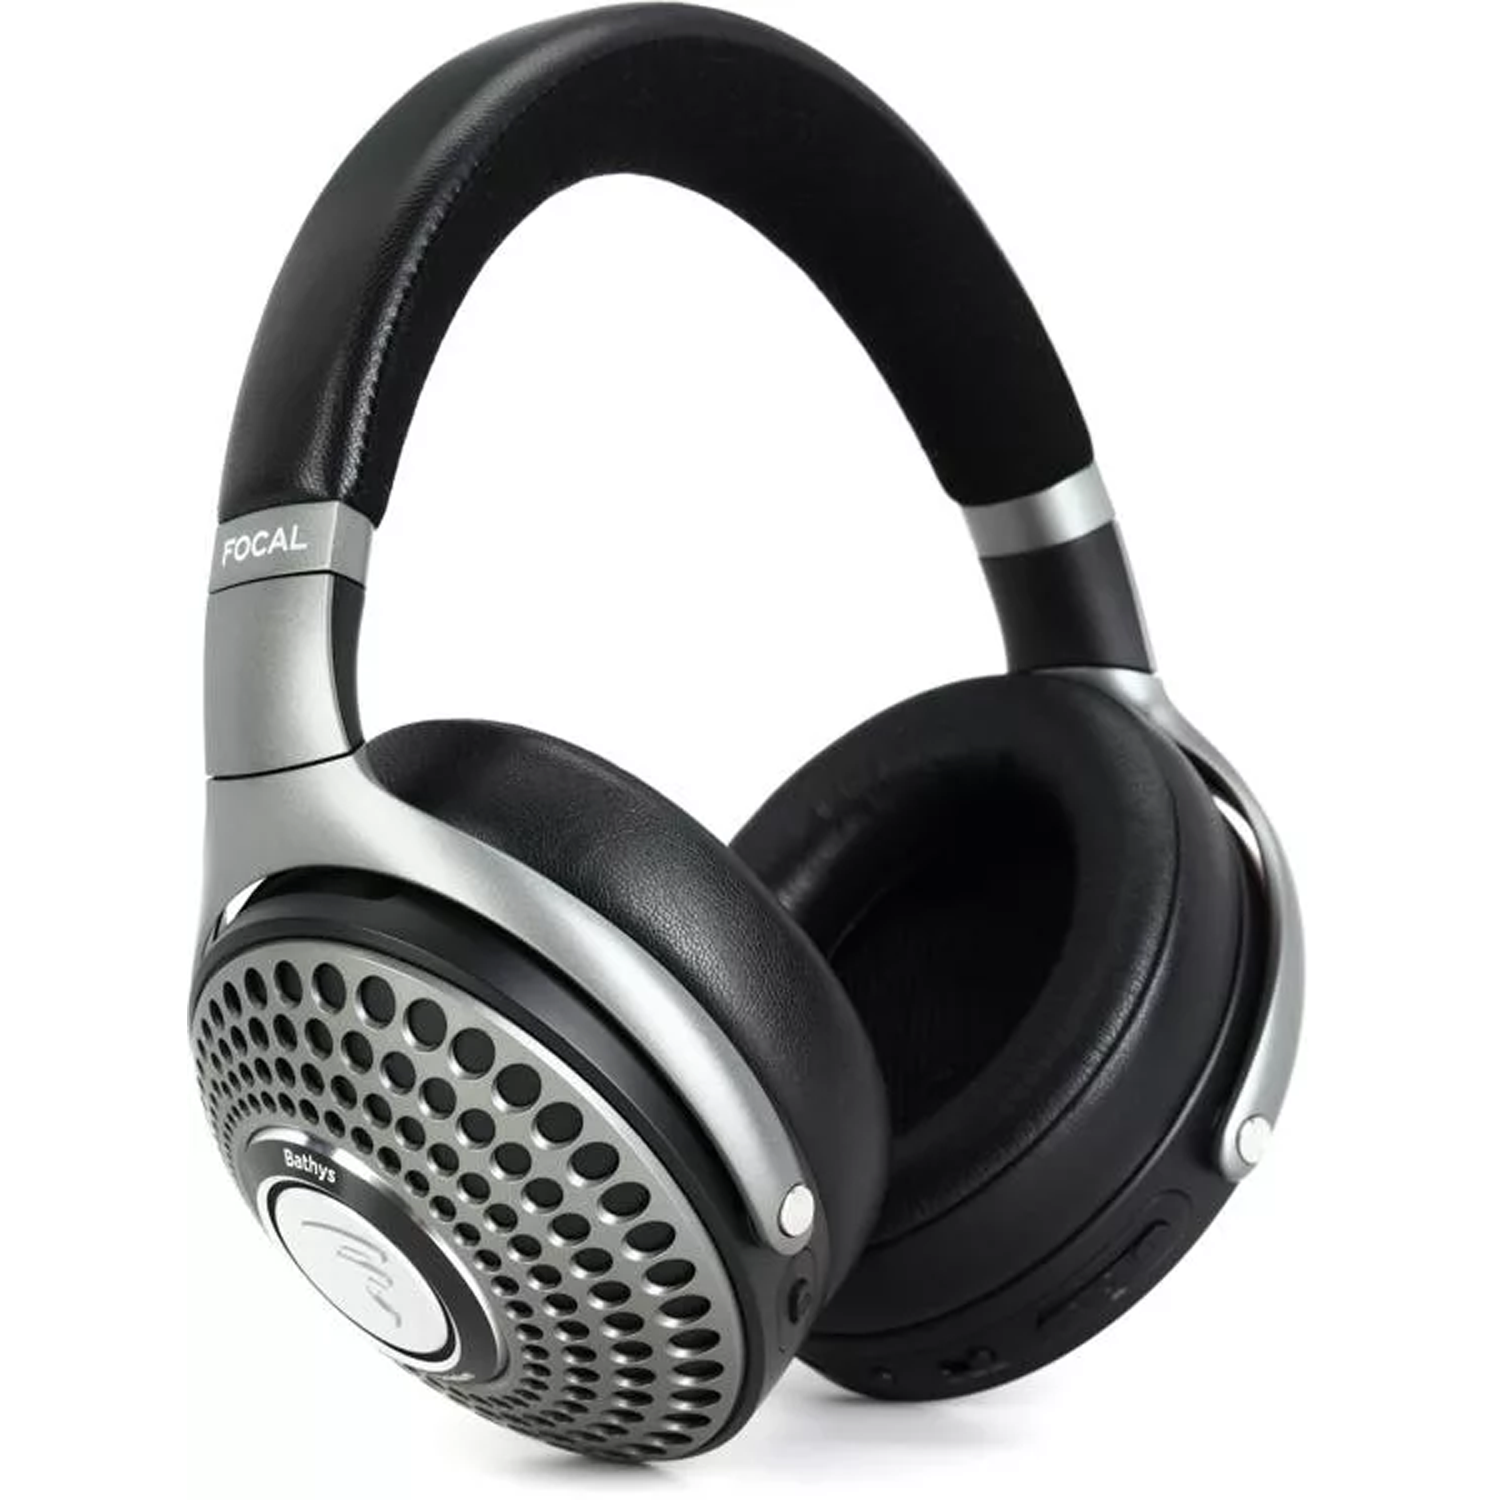 FOCAL Bathys Over Ear Noise Cancelling Bluetooth Headphones